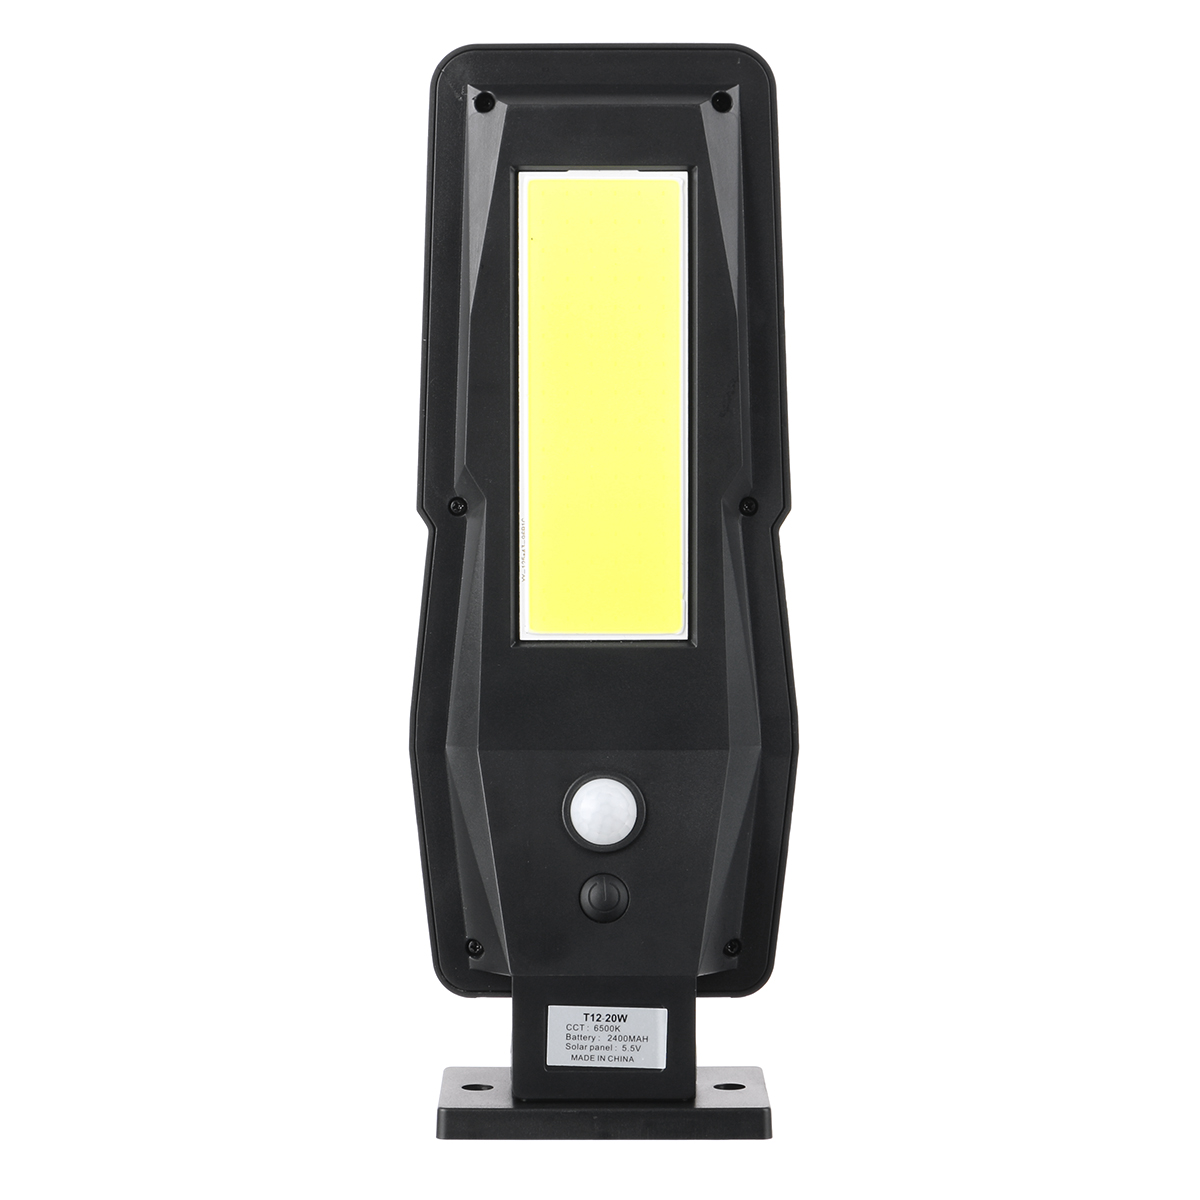 96COB Solar Street Light PIR Motion Sensor Timing Safety Lamp